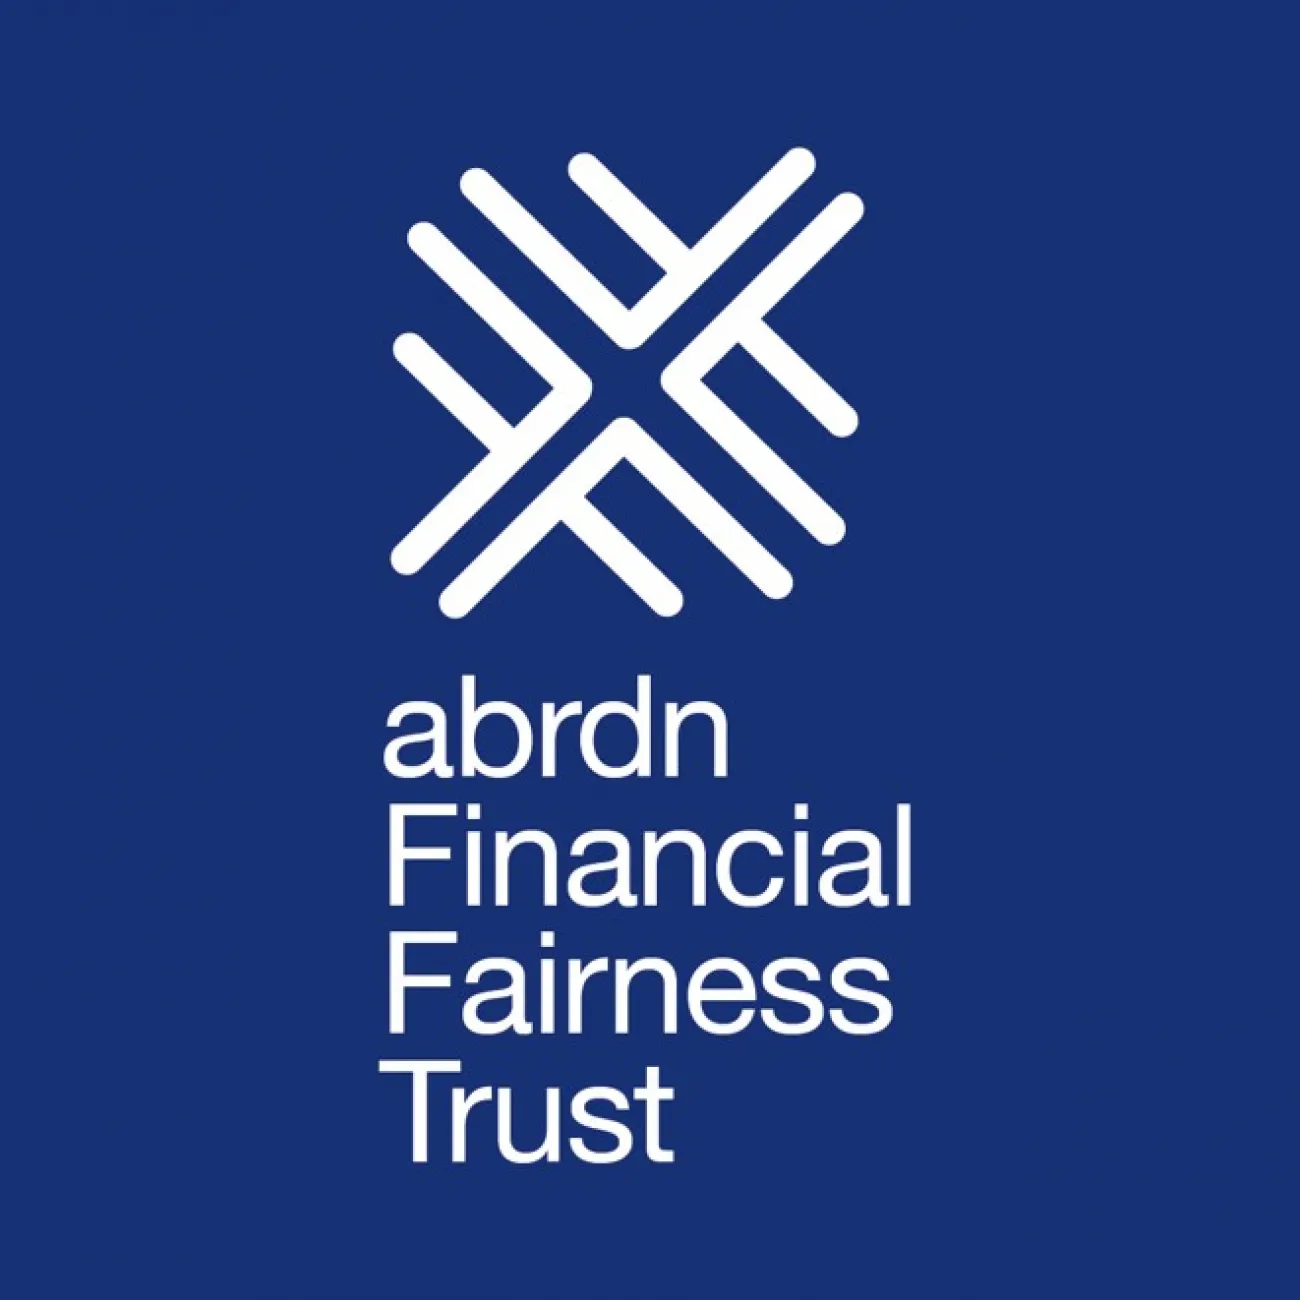 abrdn financial fitness frust logo